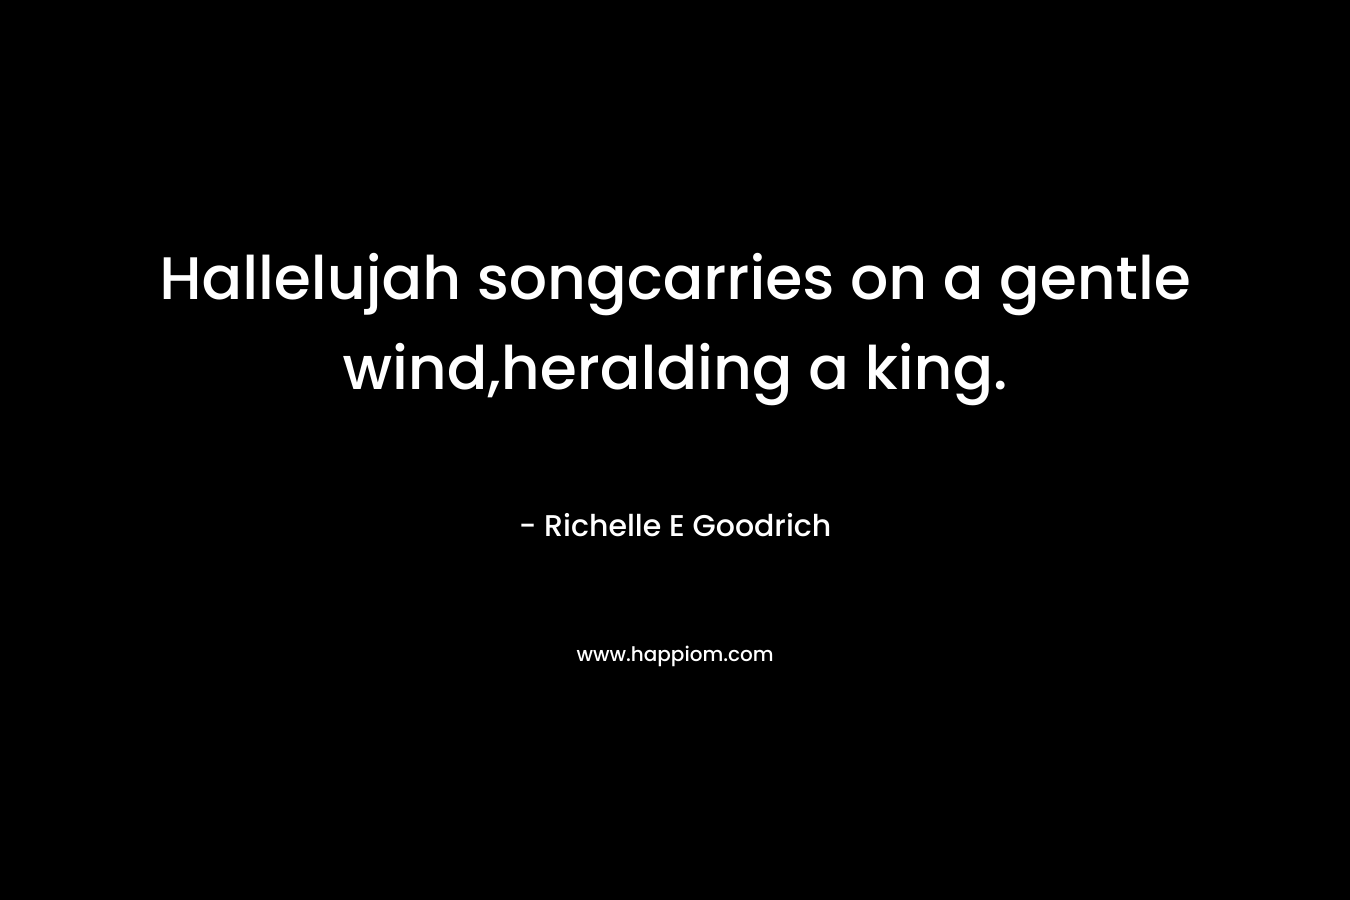 Hallelujah songcarries on a gentle wind,heralding a king.